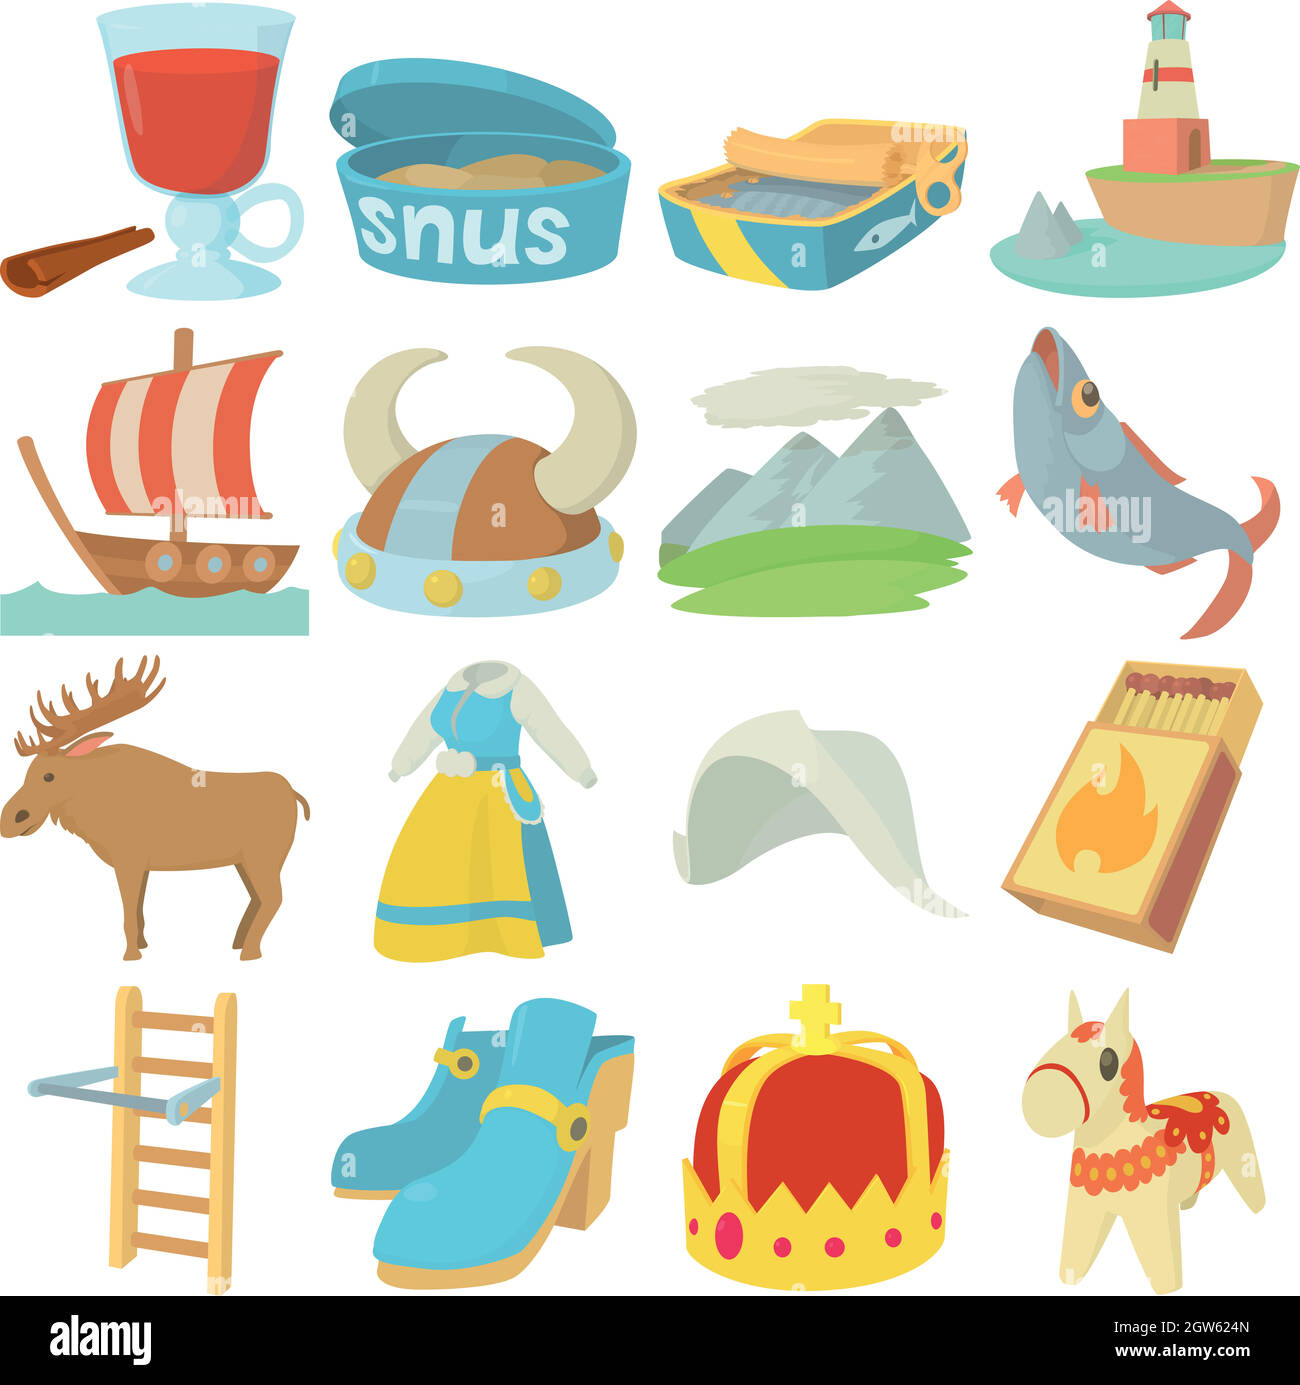 Sweden travel symbols icons set, cartoon style Stock Vector